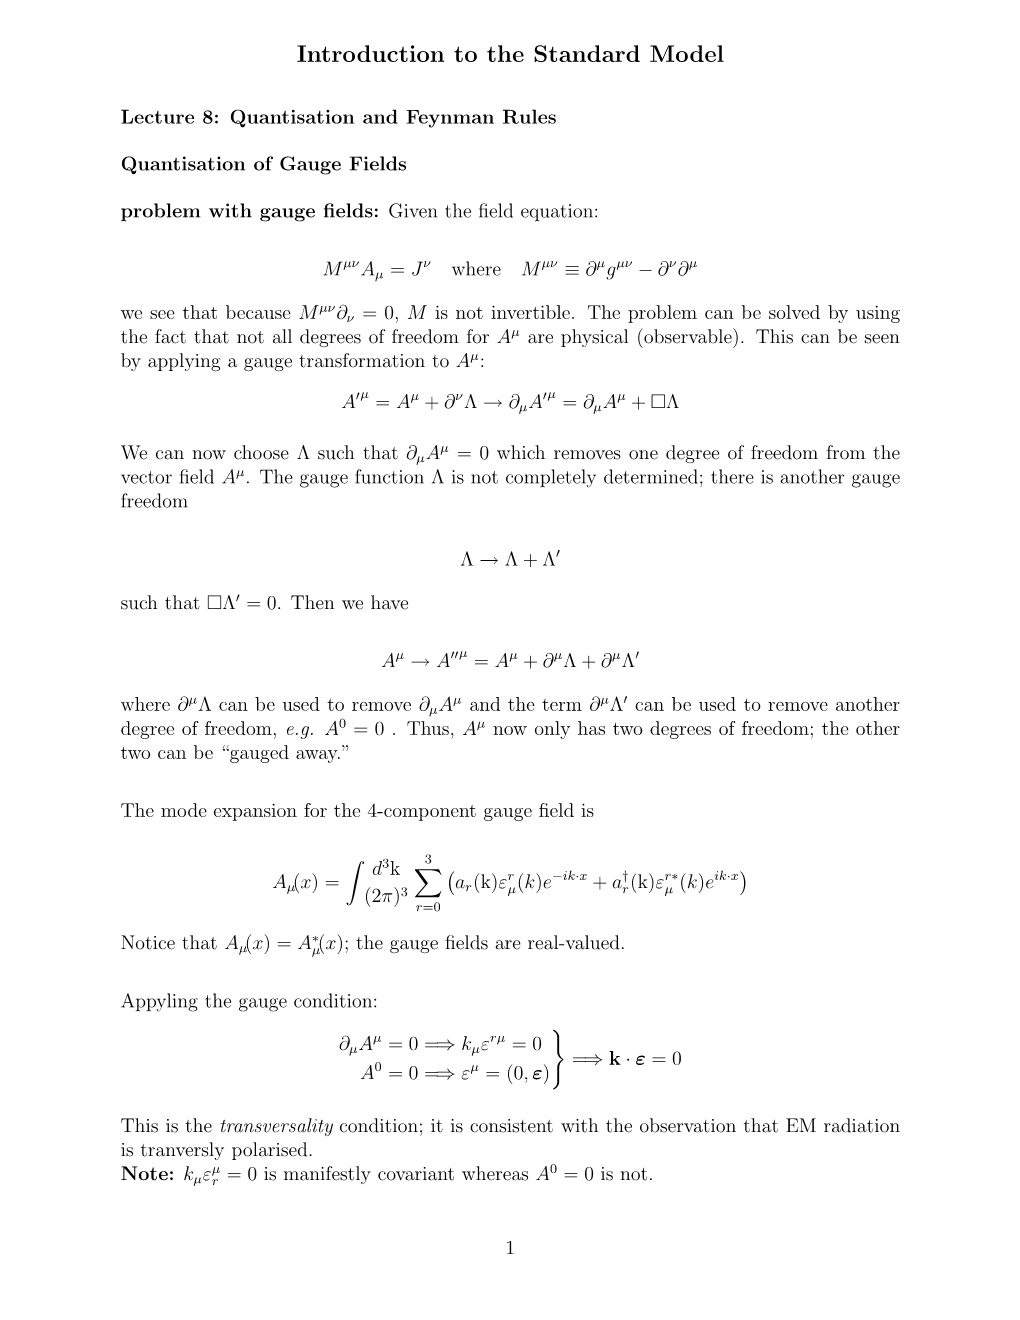 Gauge Fields Quantization. Feynman Rules